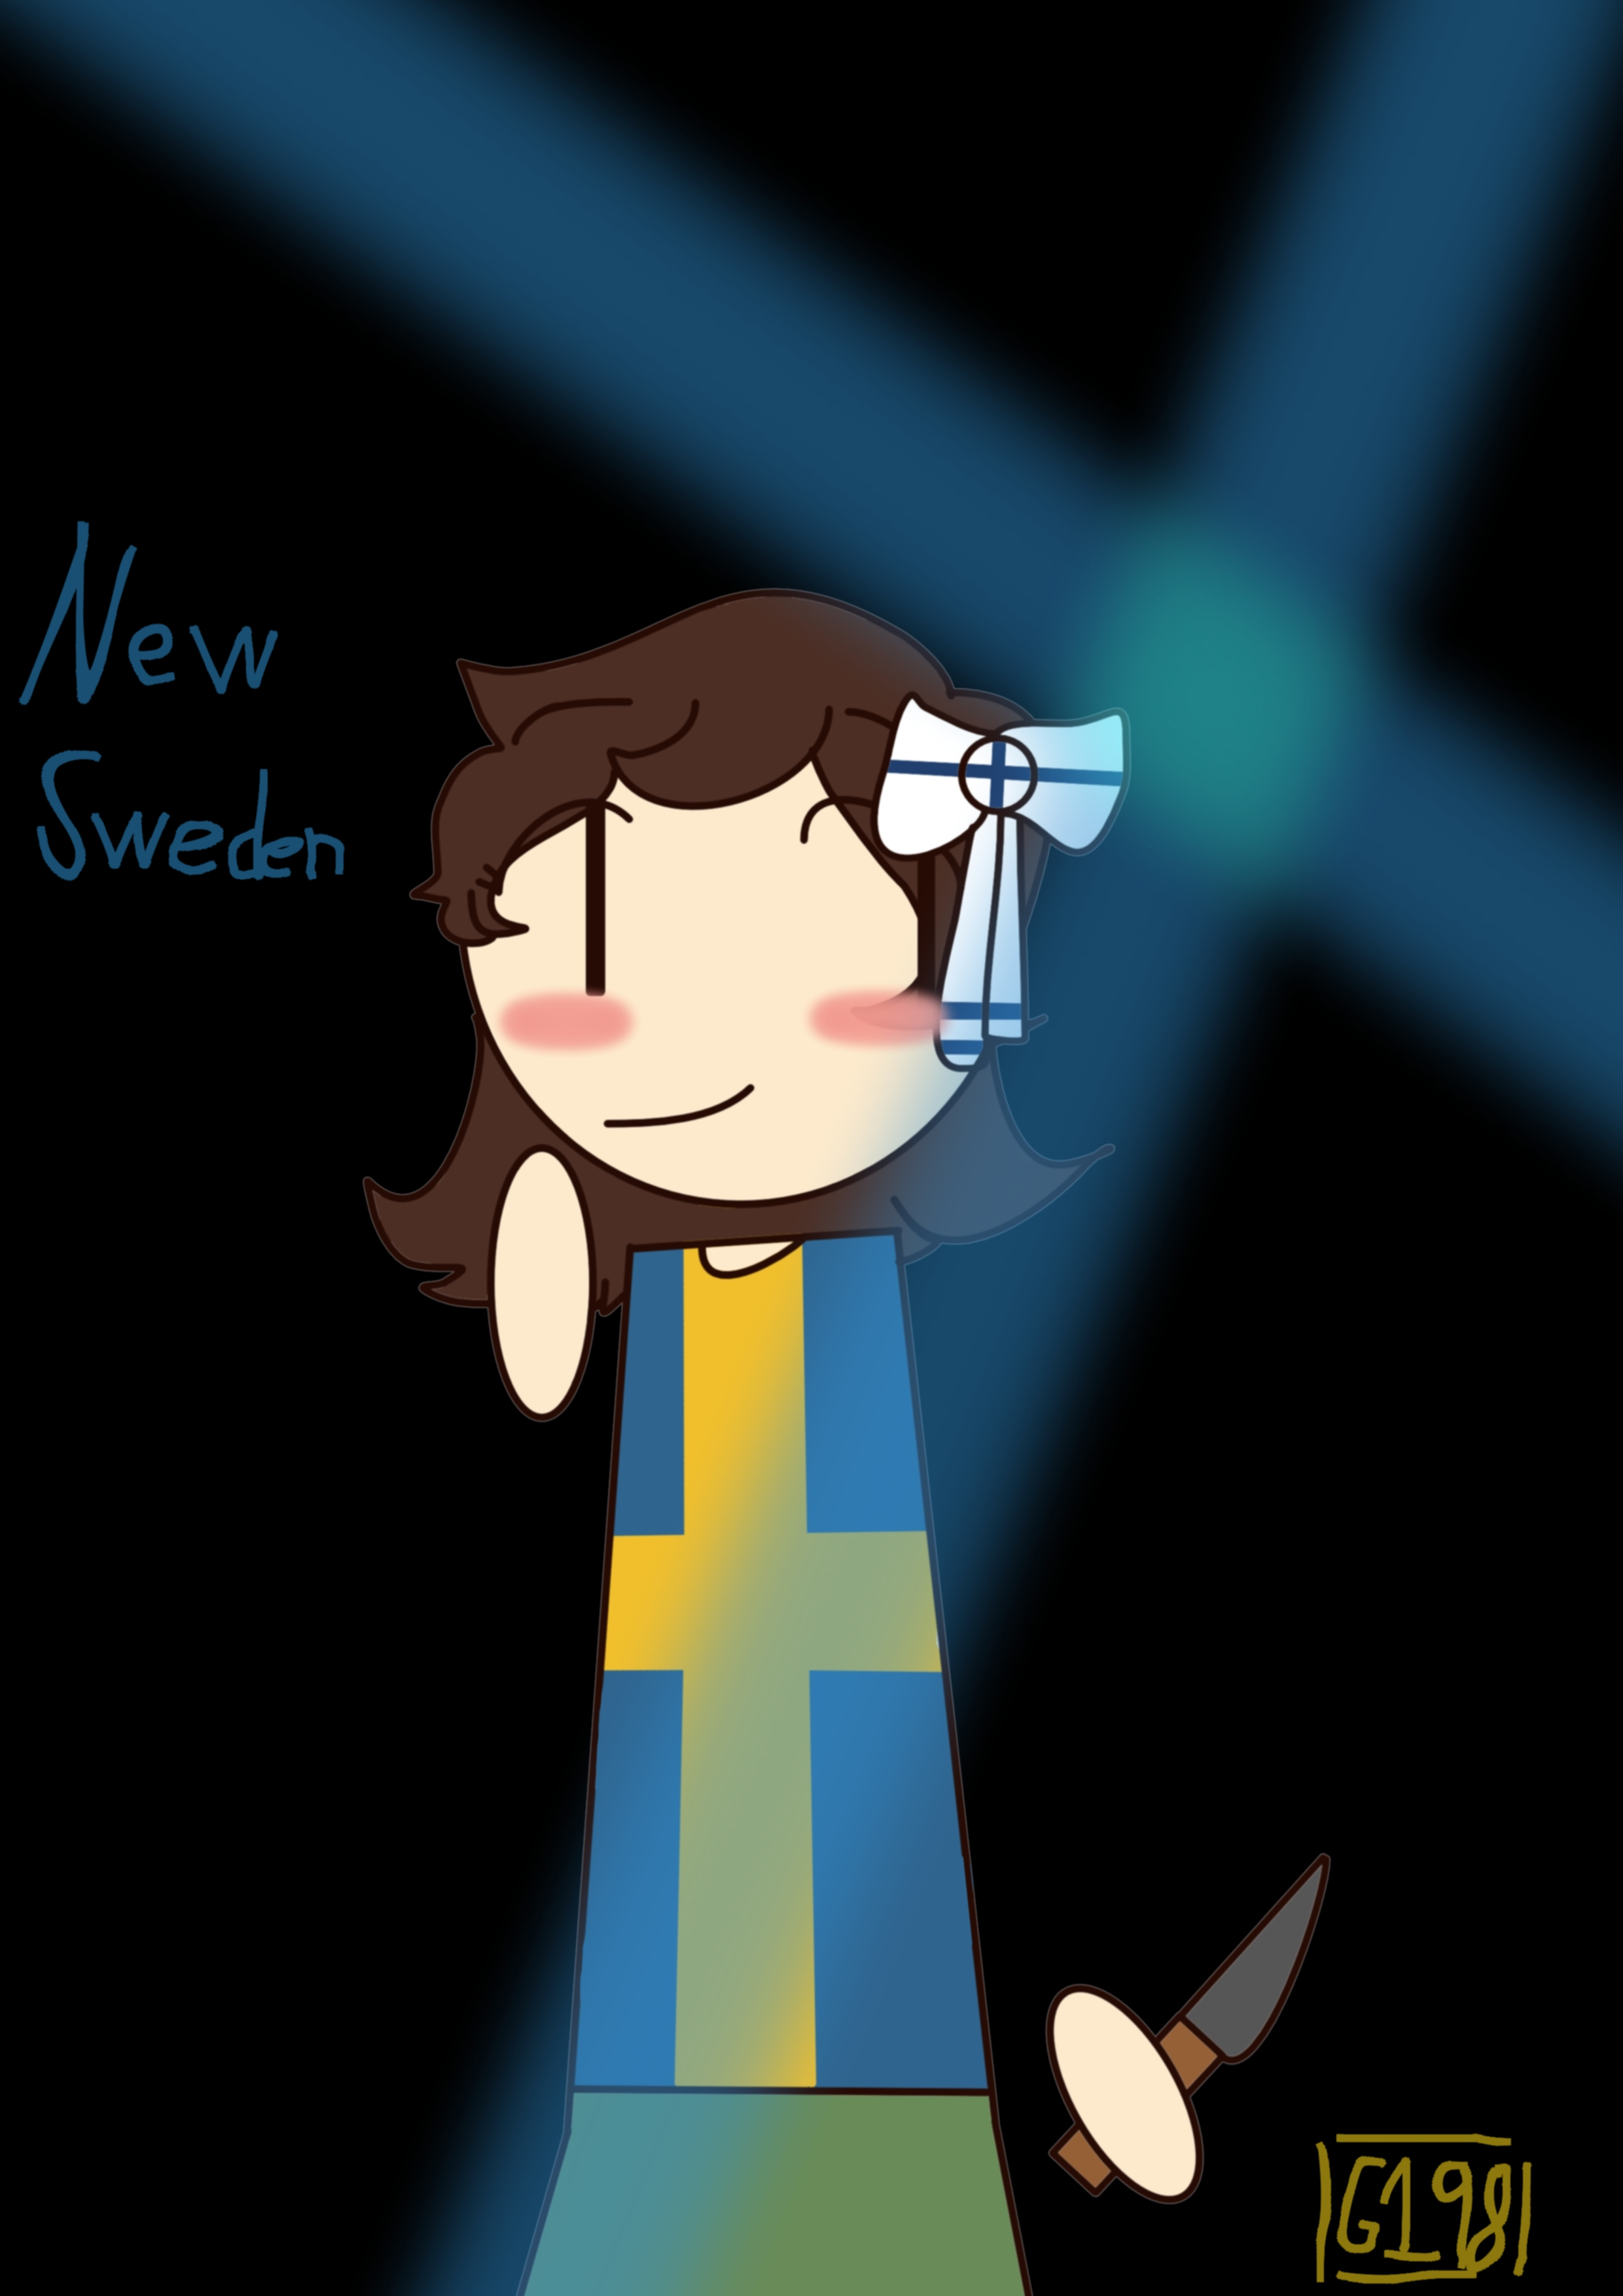 New Sweden fanart